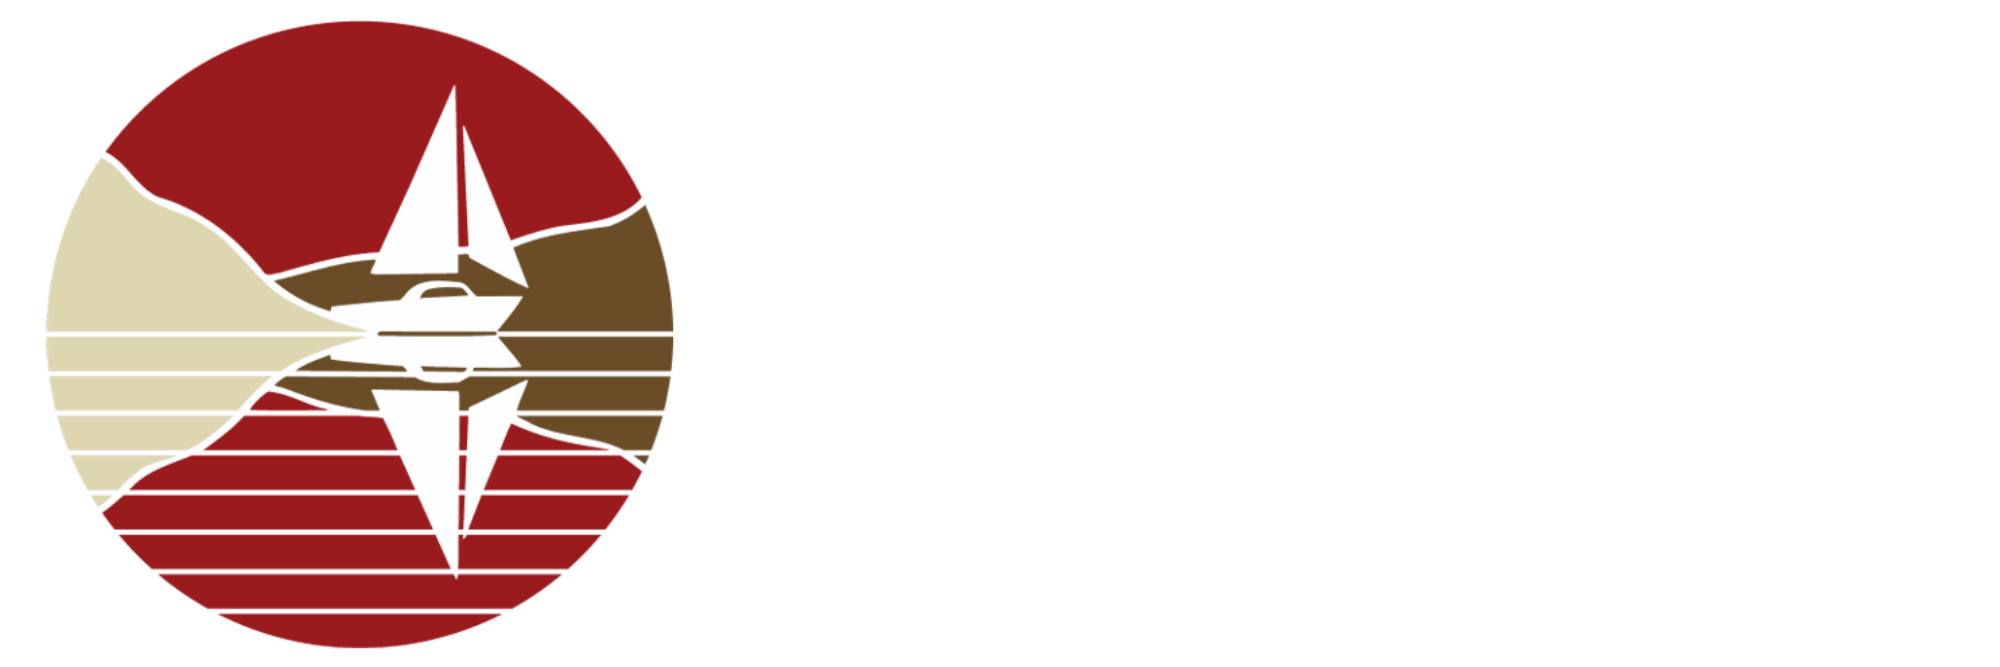 Ottawa County Parks & Recreation